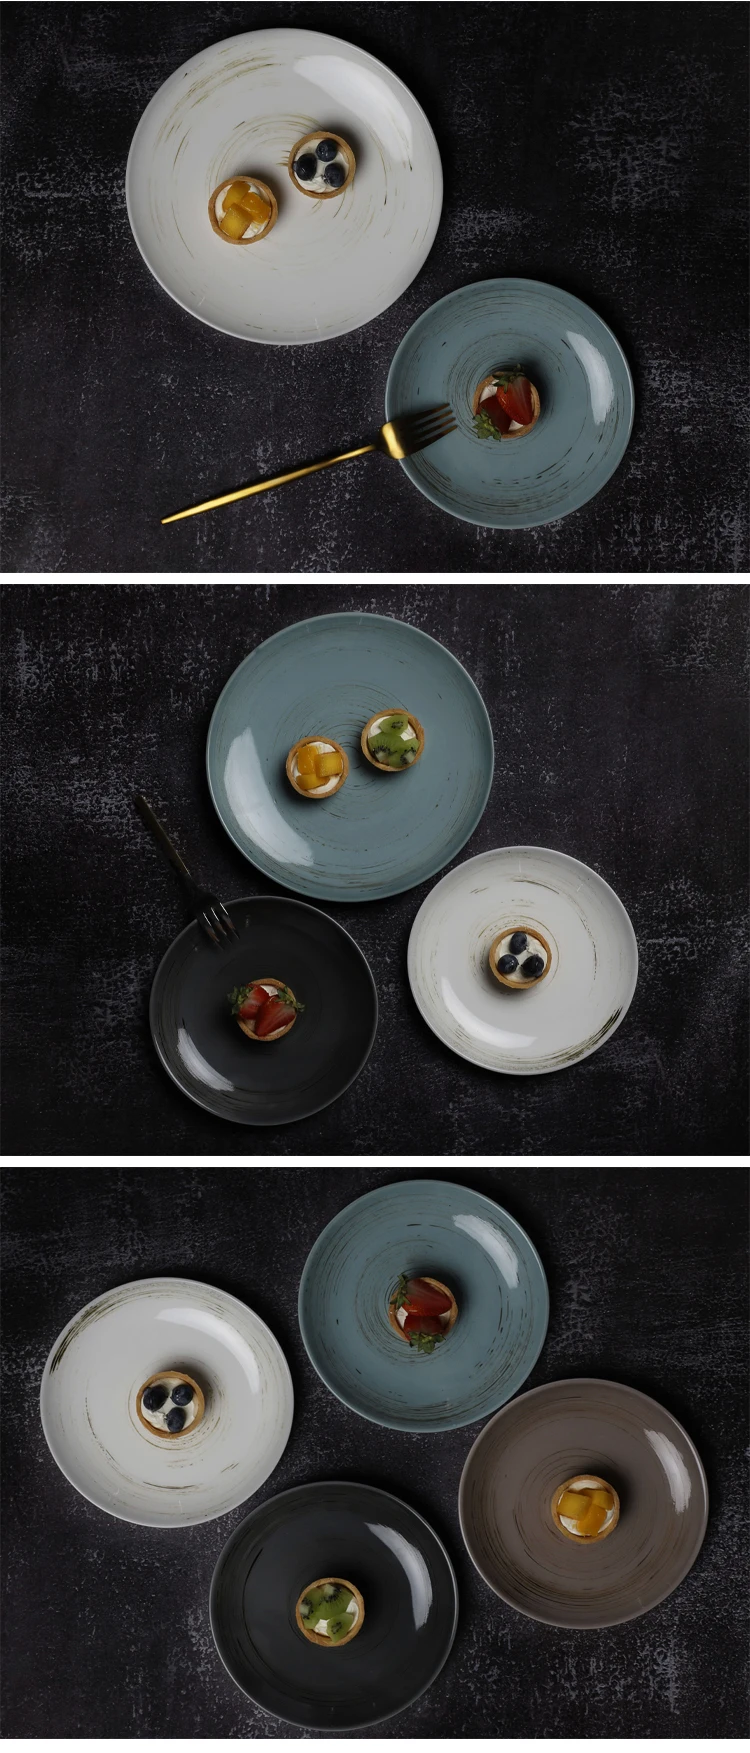 28ceramics Black Dinnerware Ceramic Serving Plate, 28ceramics Banquet Hall Crockery Dinnerware 4 Colors Ceramic Plate*